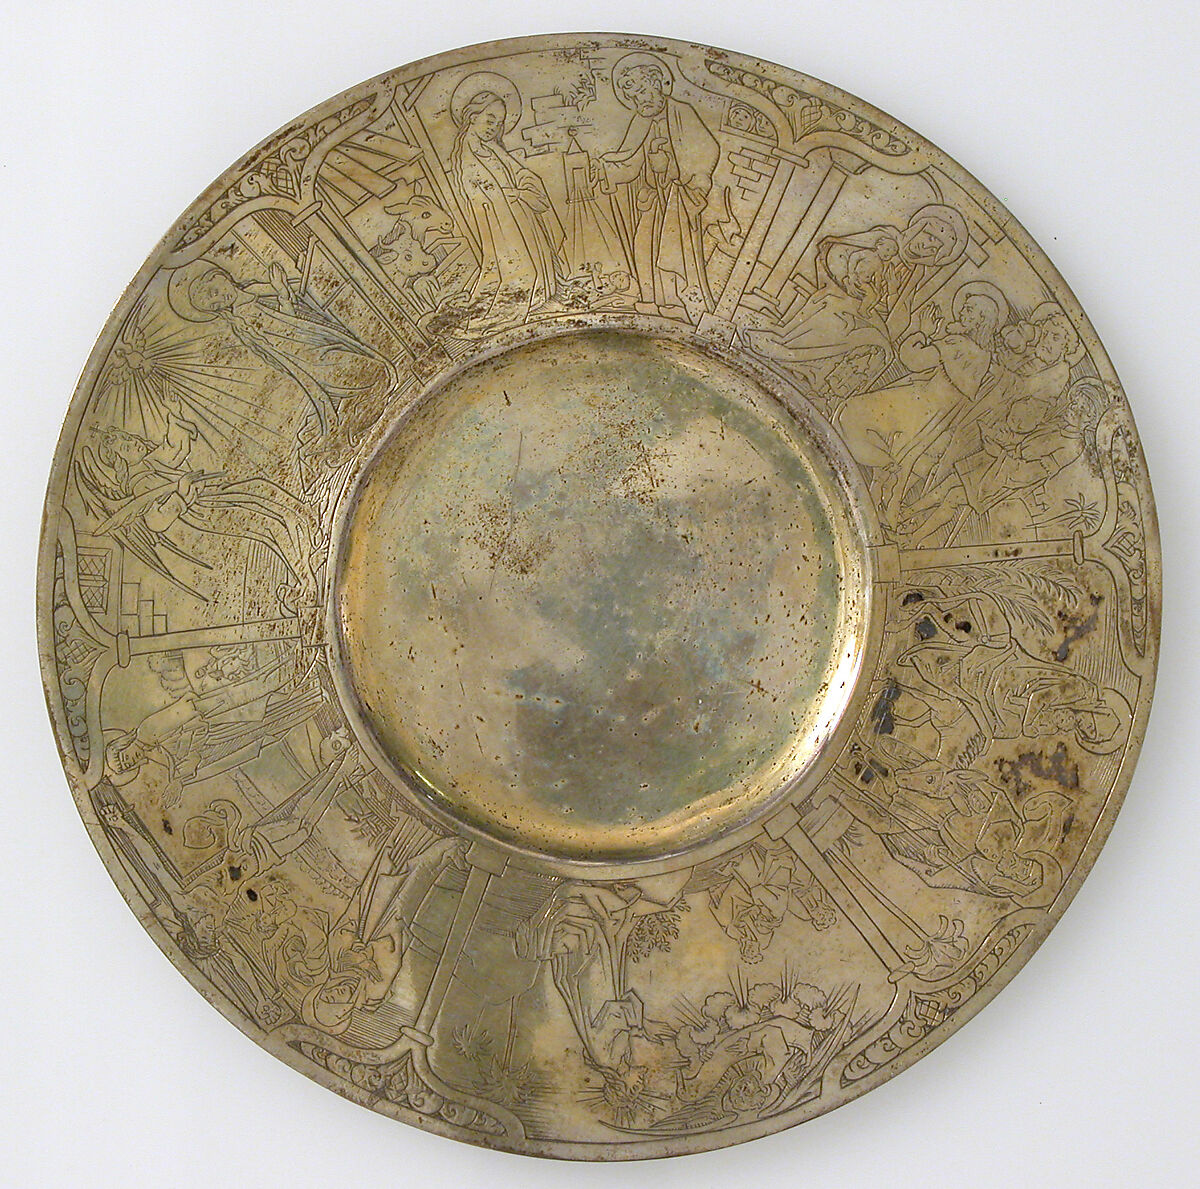 Paten, Brass, formerly silver plated, South Netherlandish 